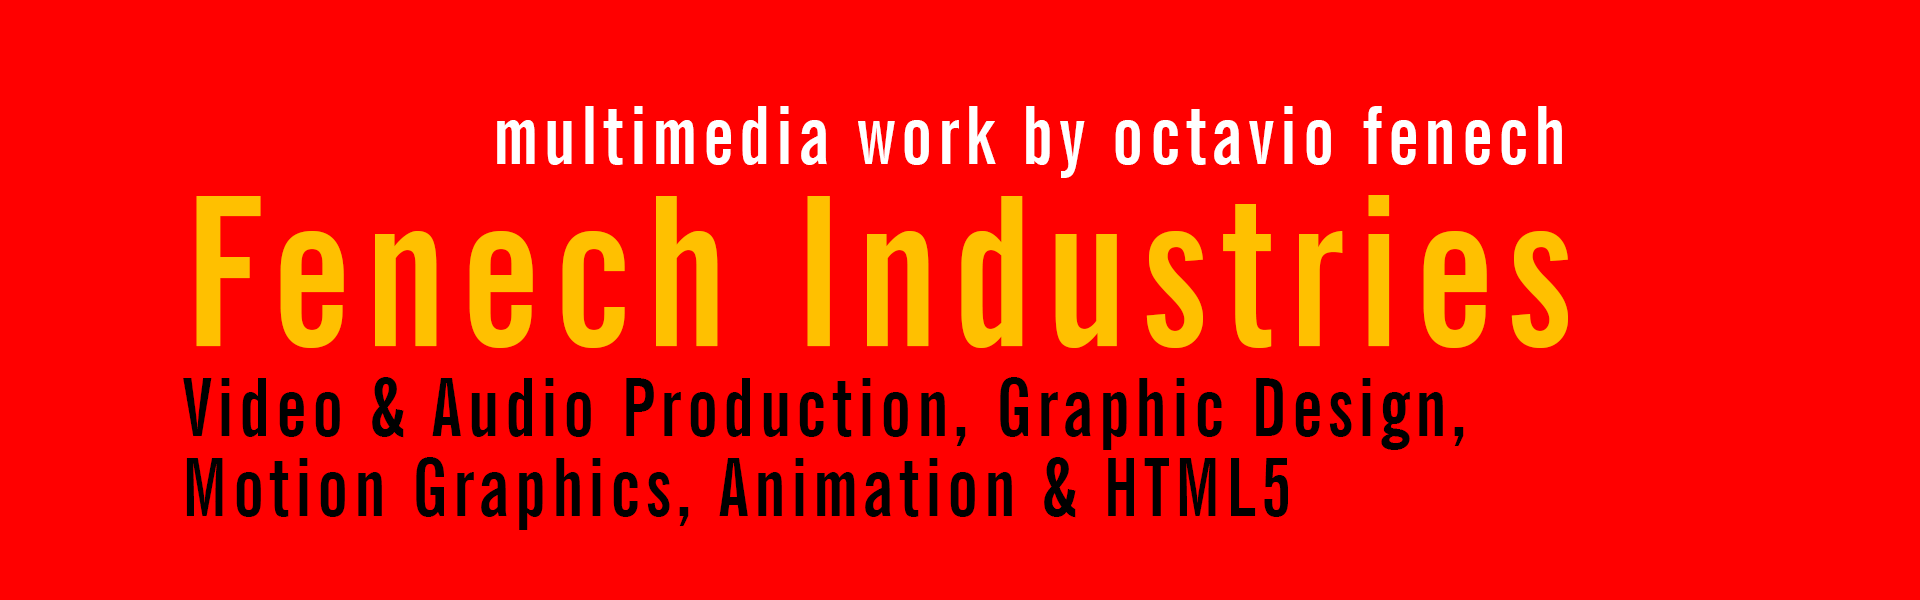 Octavio Fenech. Video & Audio Production, Graphic Design, Motion Graphics and Animation